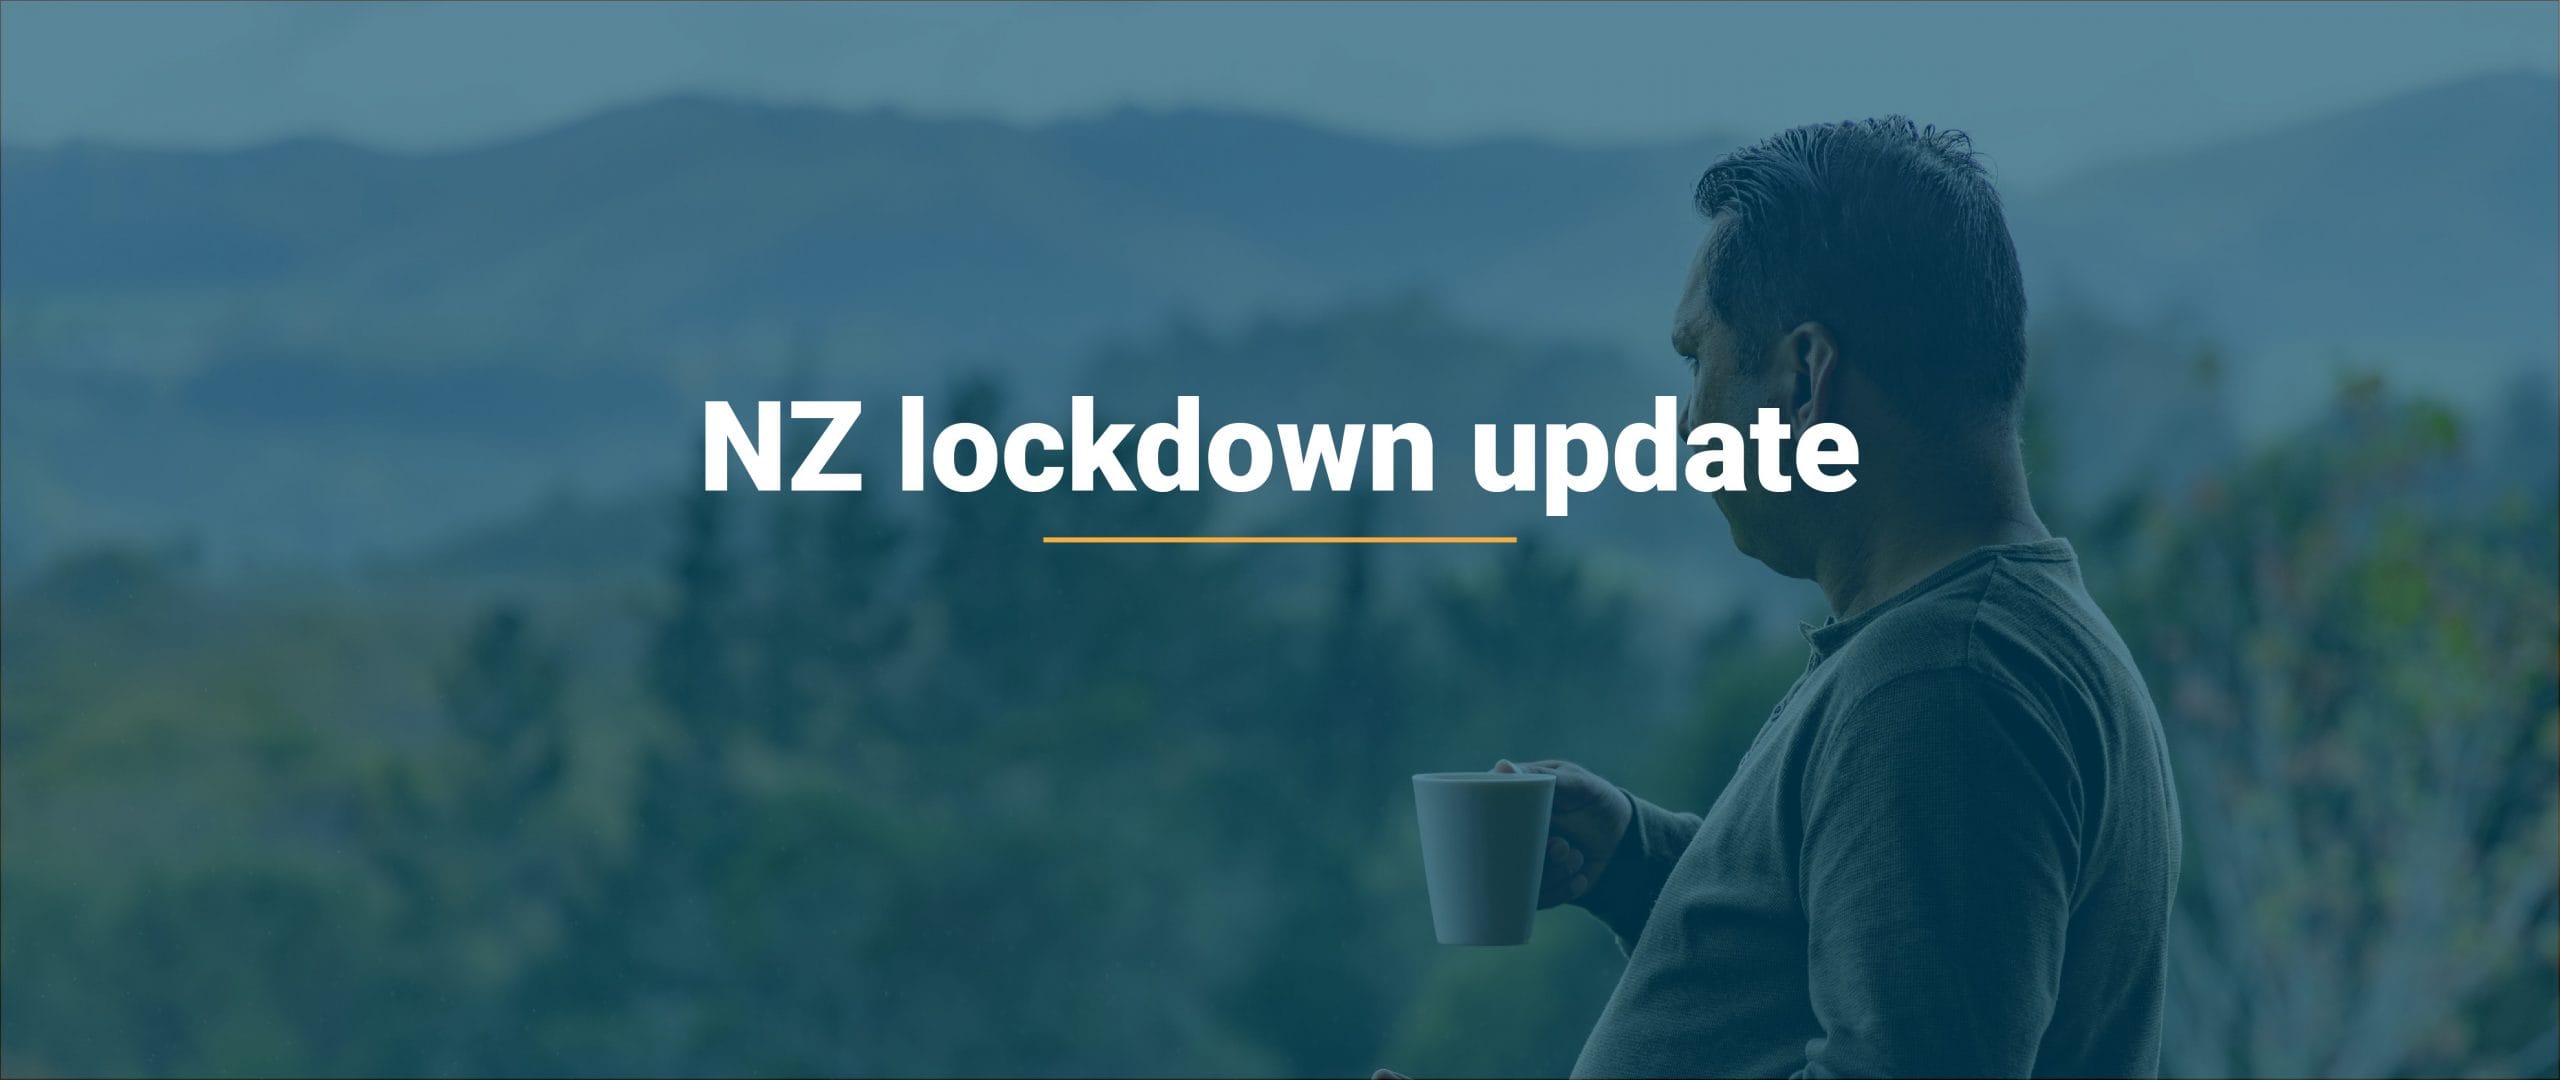 blog cover - nz lockdown